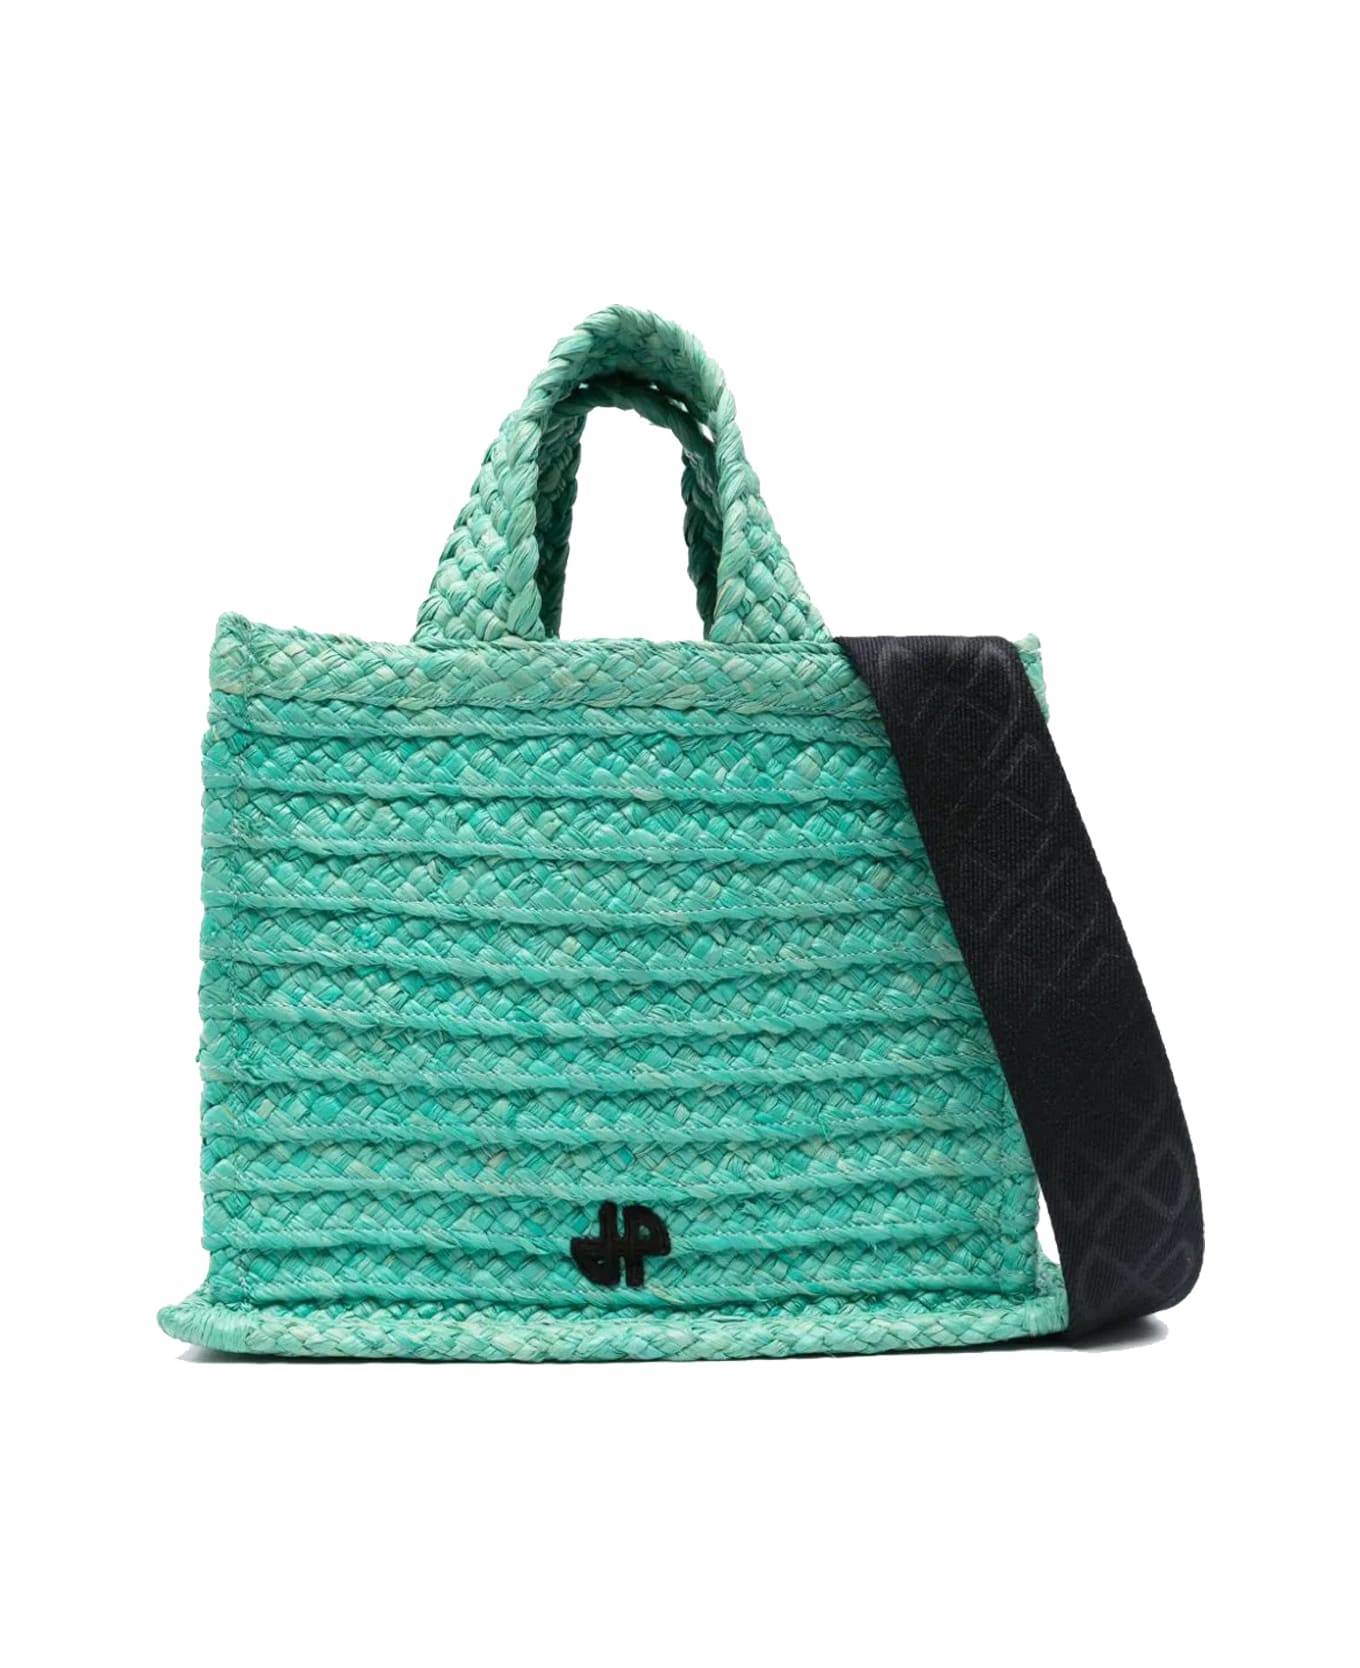 Patou Handbag - Green